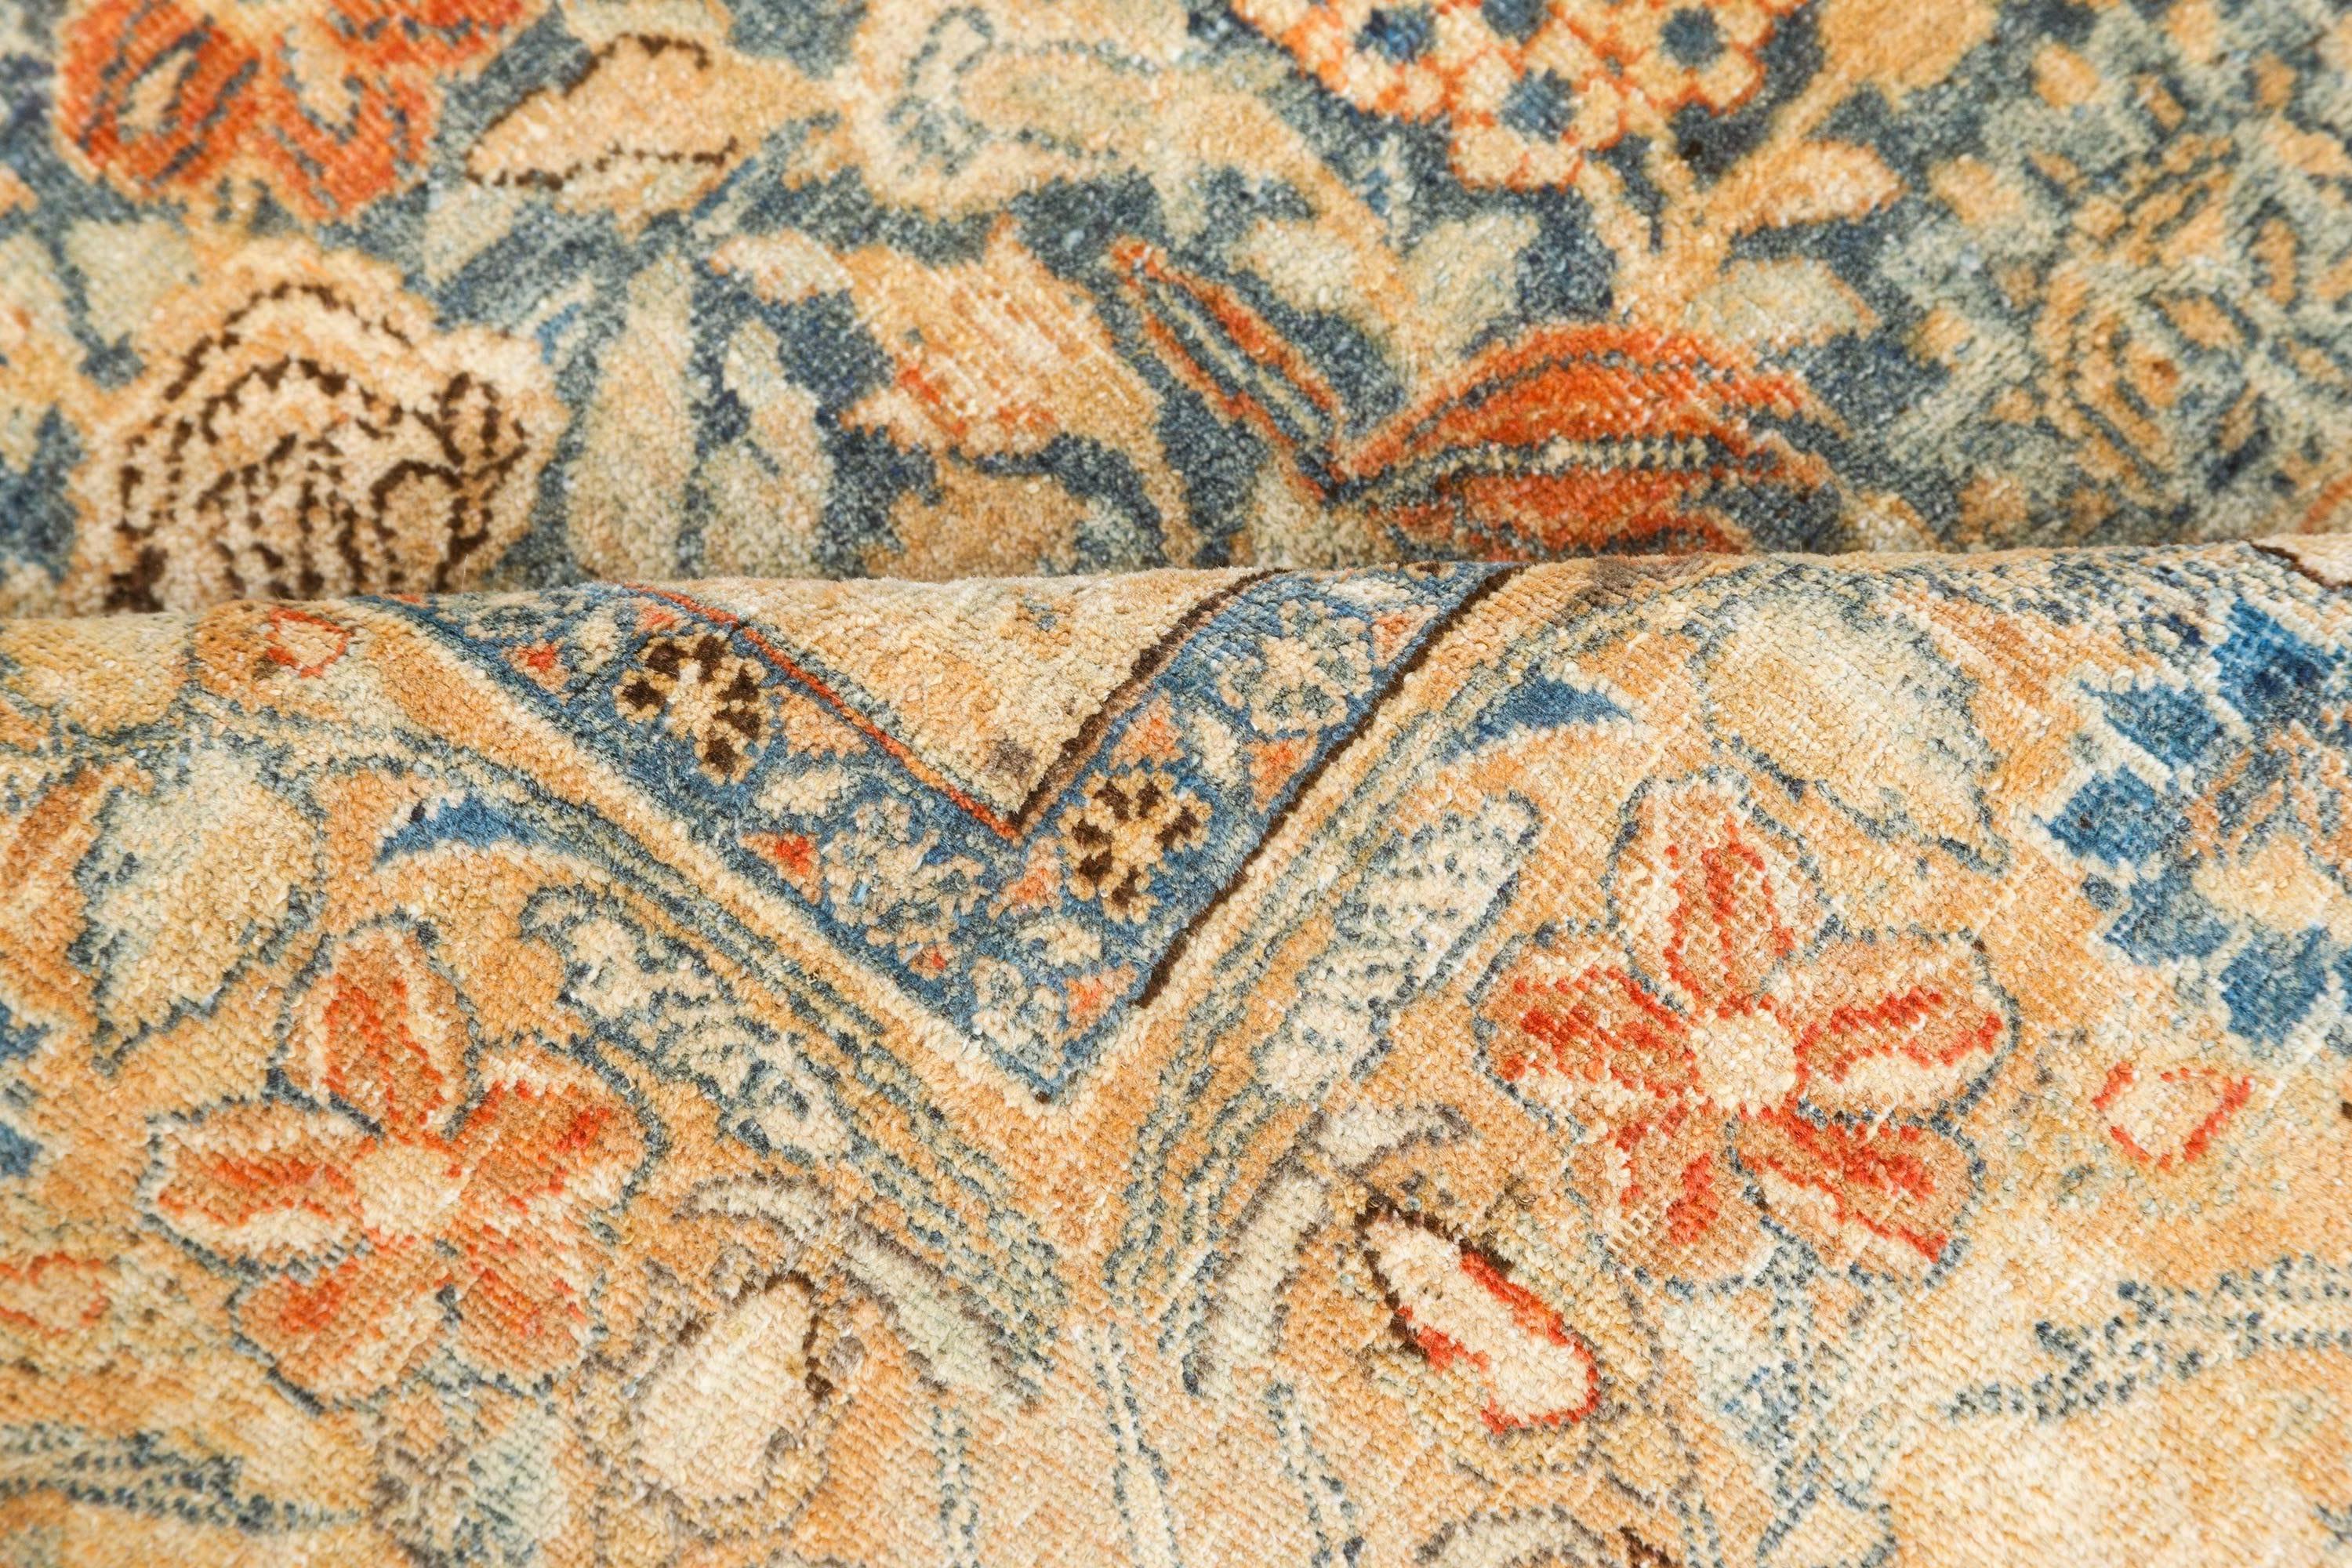 Authentic Persian Tabriz Beige Blue Handmade Wool rug
Size: 9'9